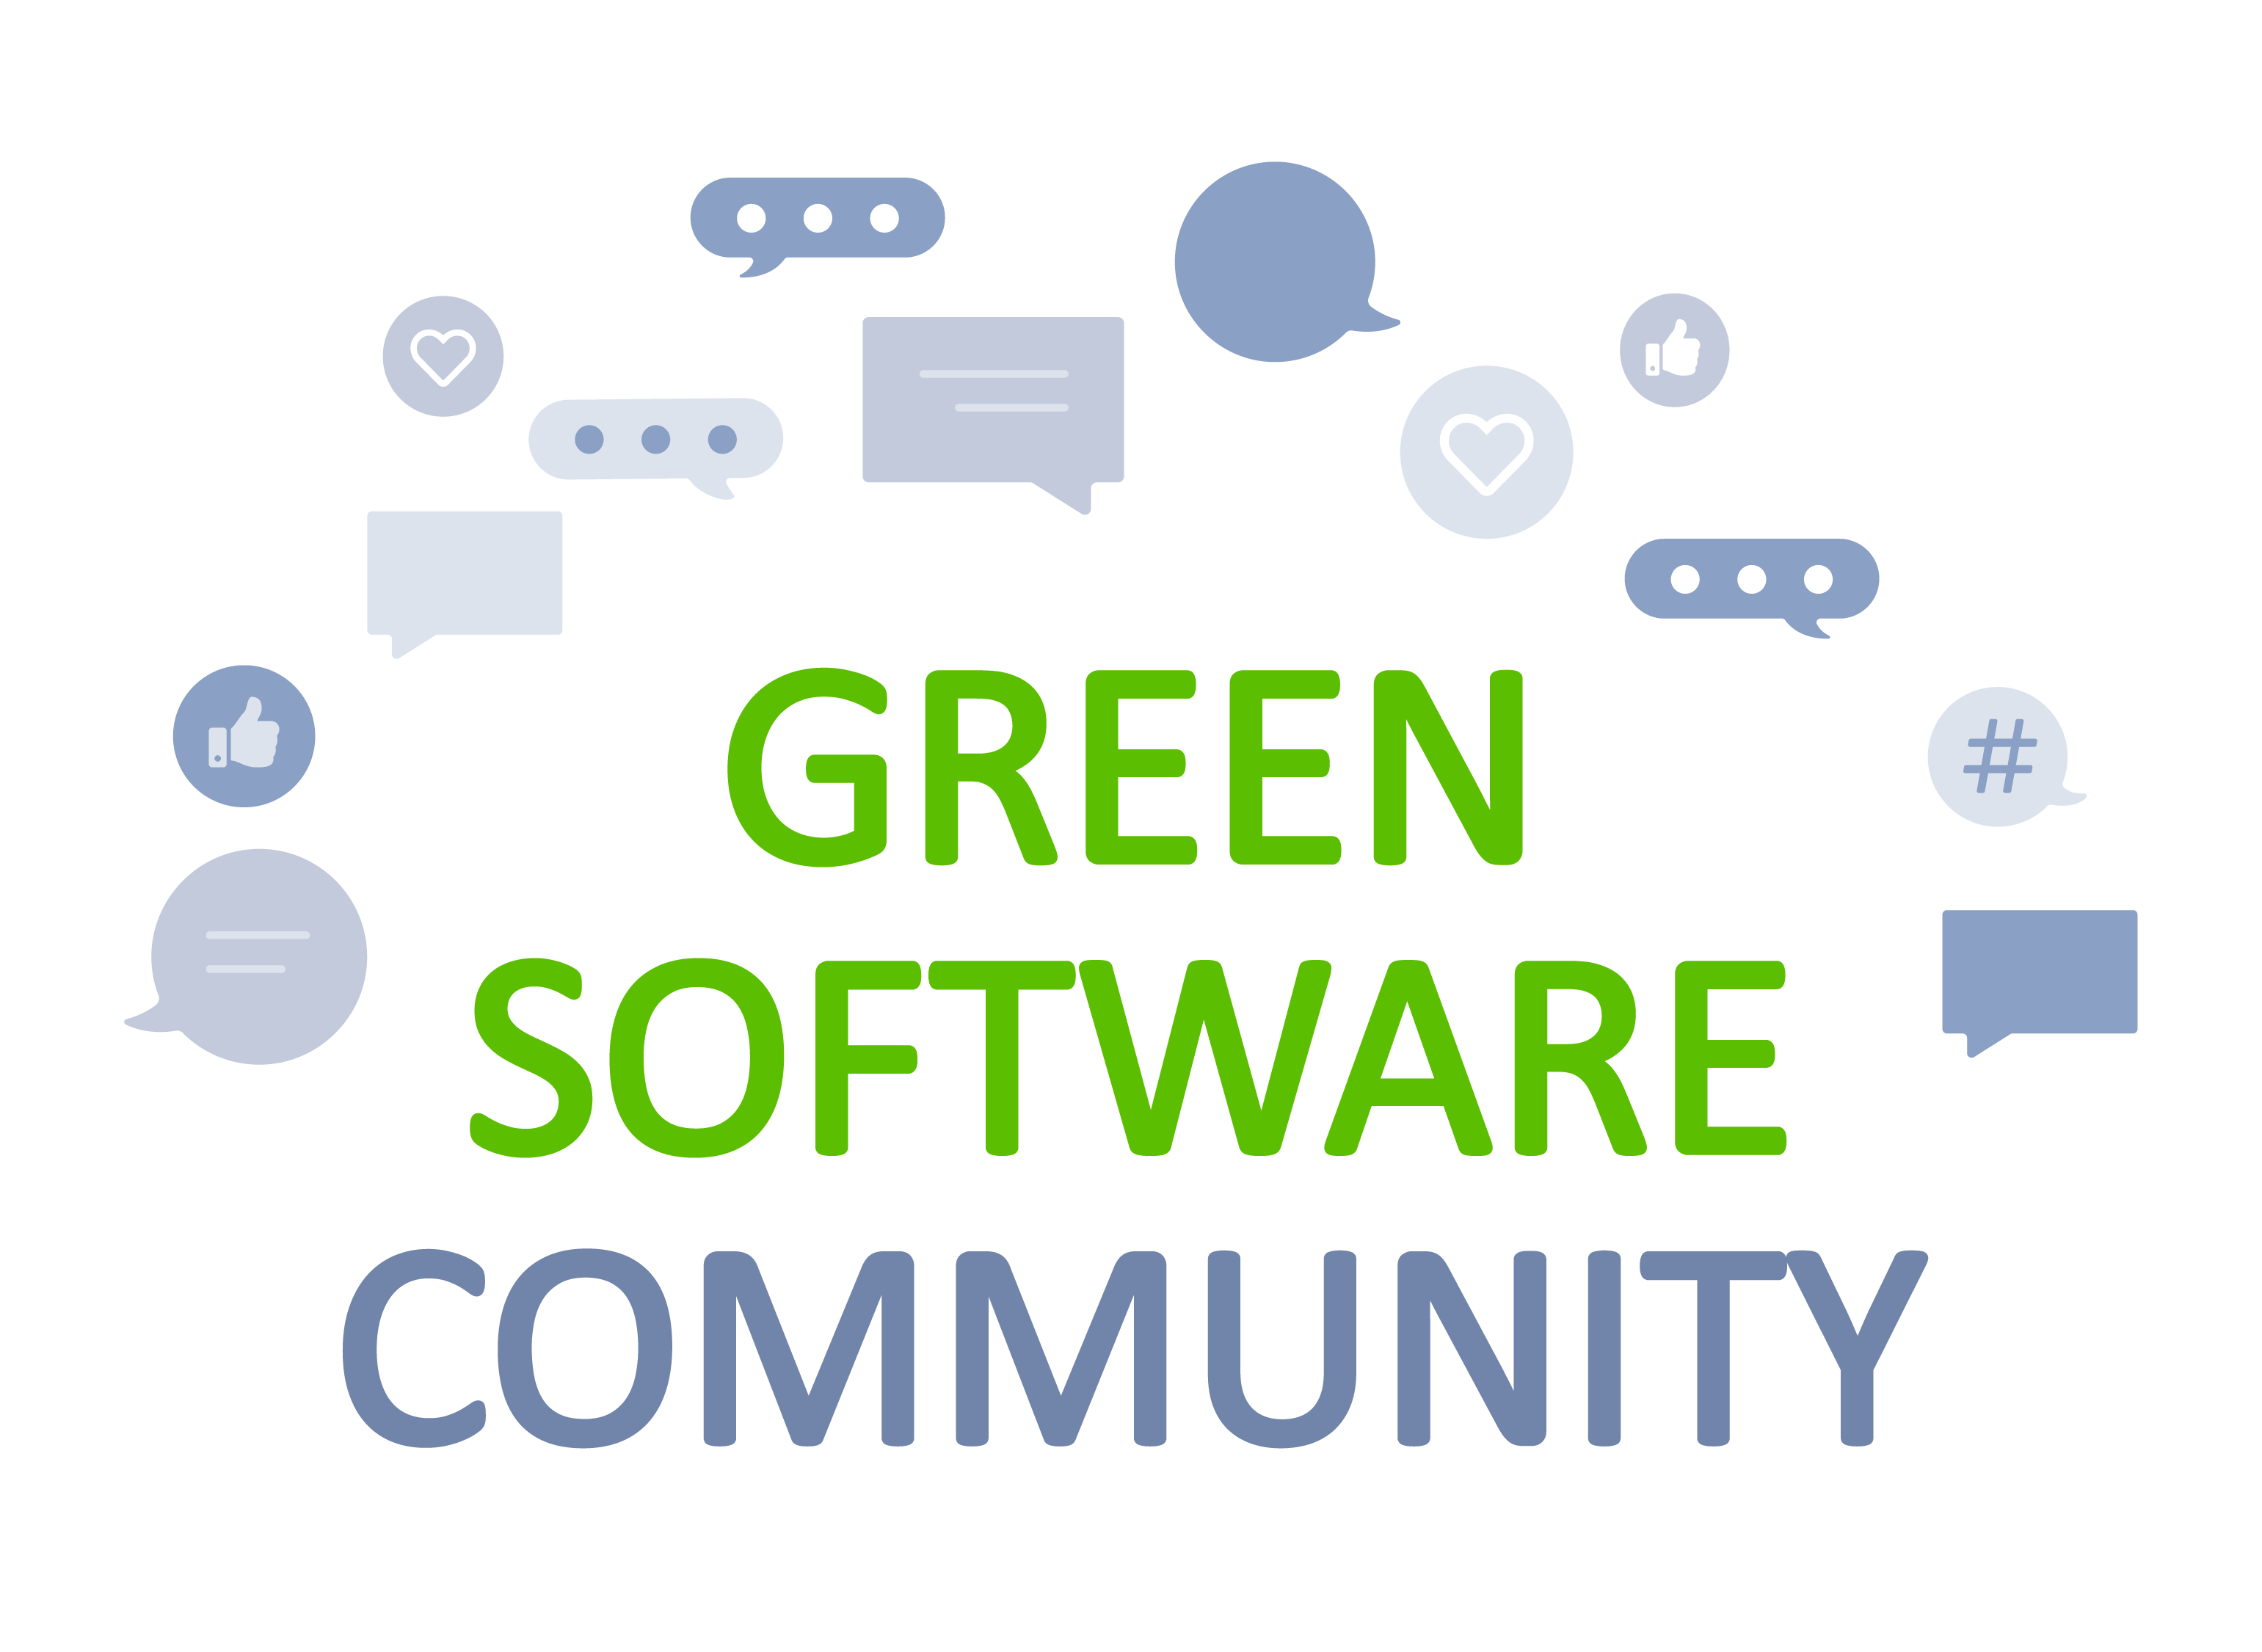 Green software community